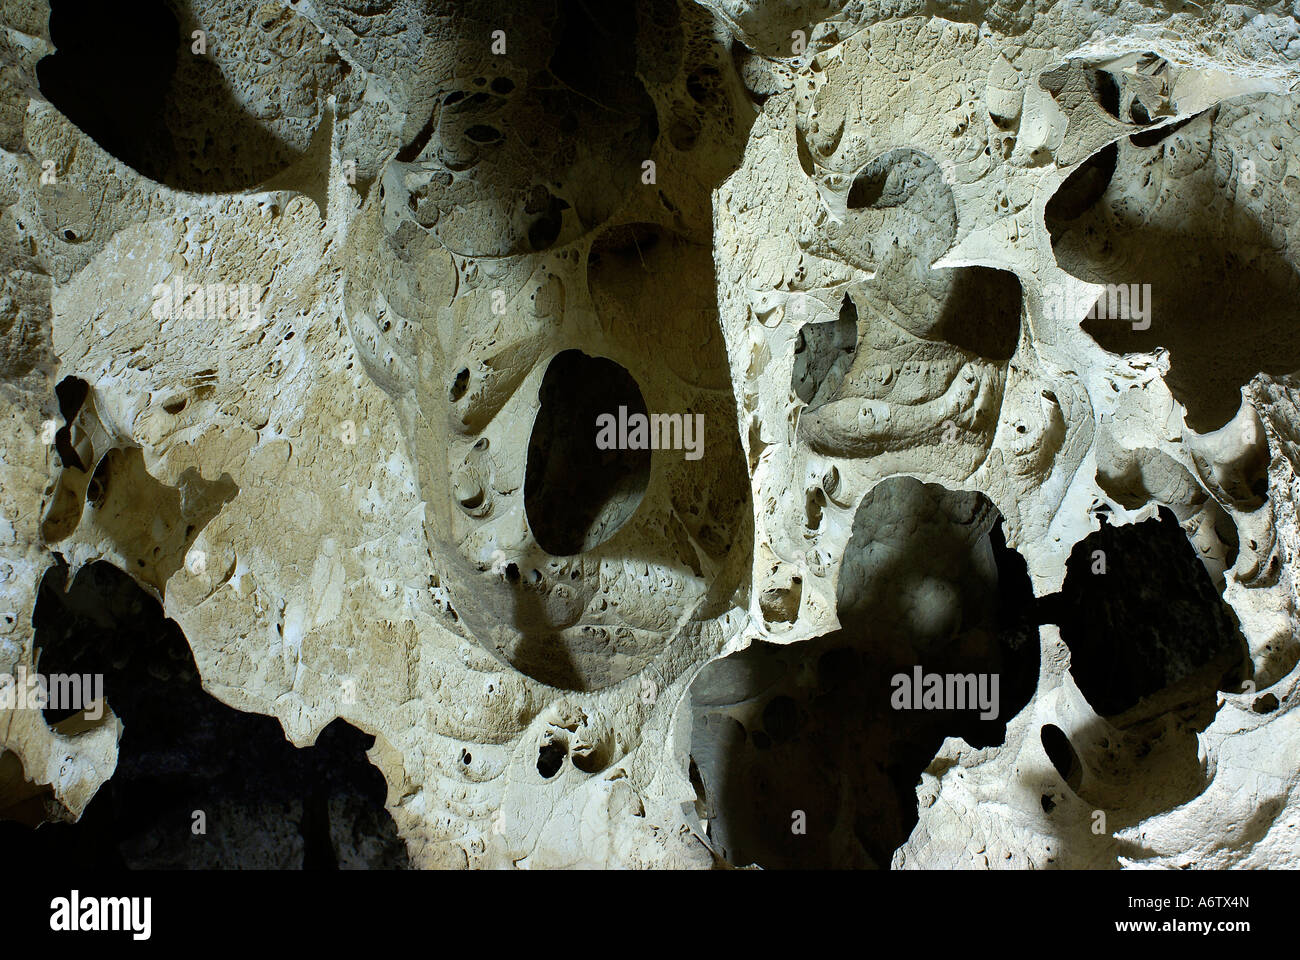 Fossilized algas in a cave, Uyuni Highlands, Bolivia Stock Photo